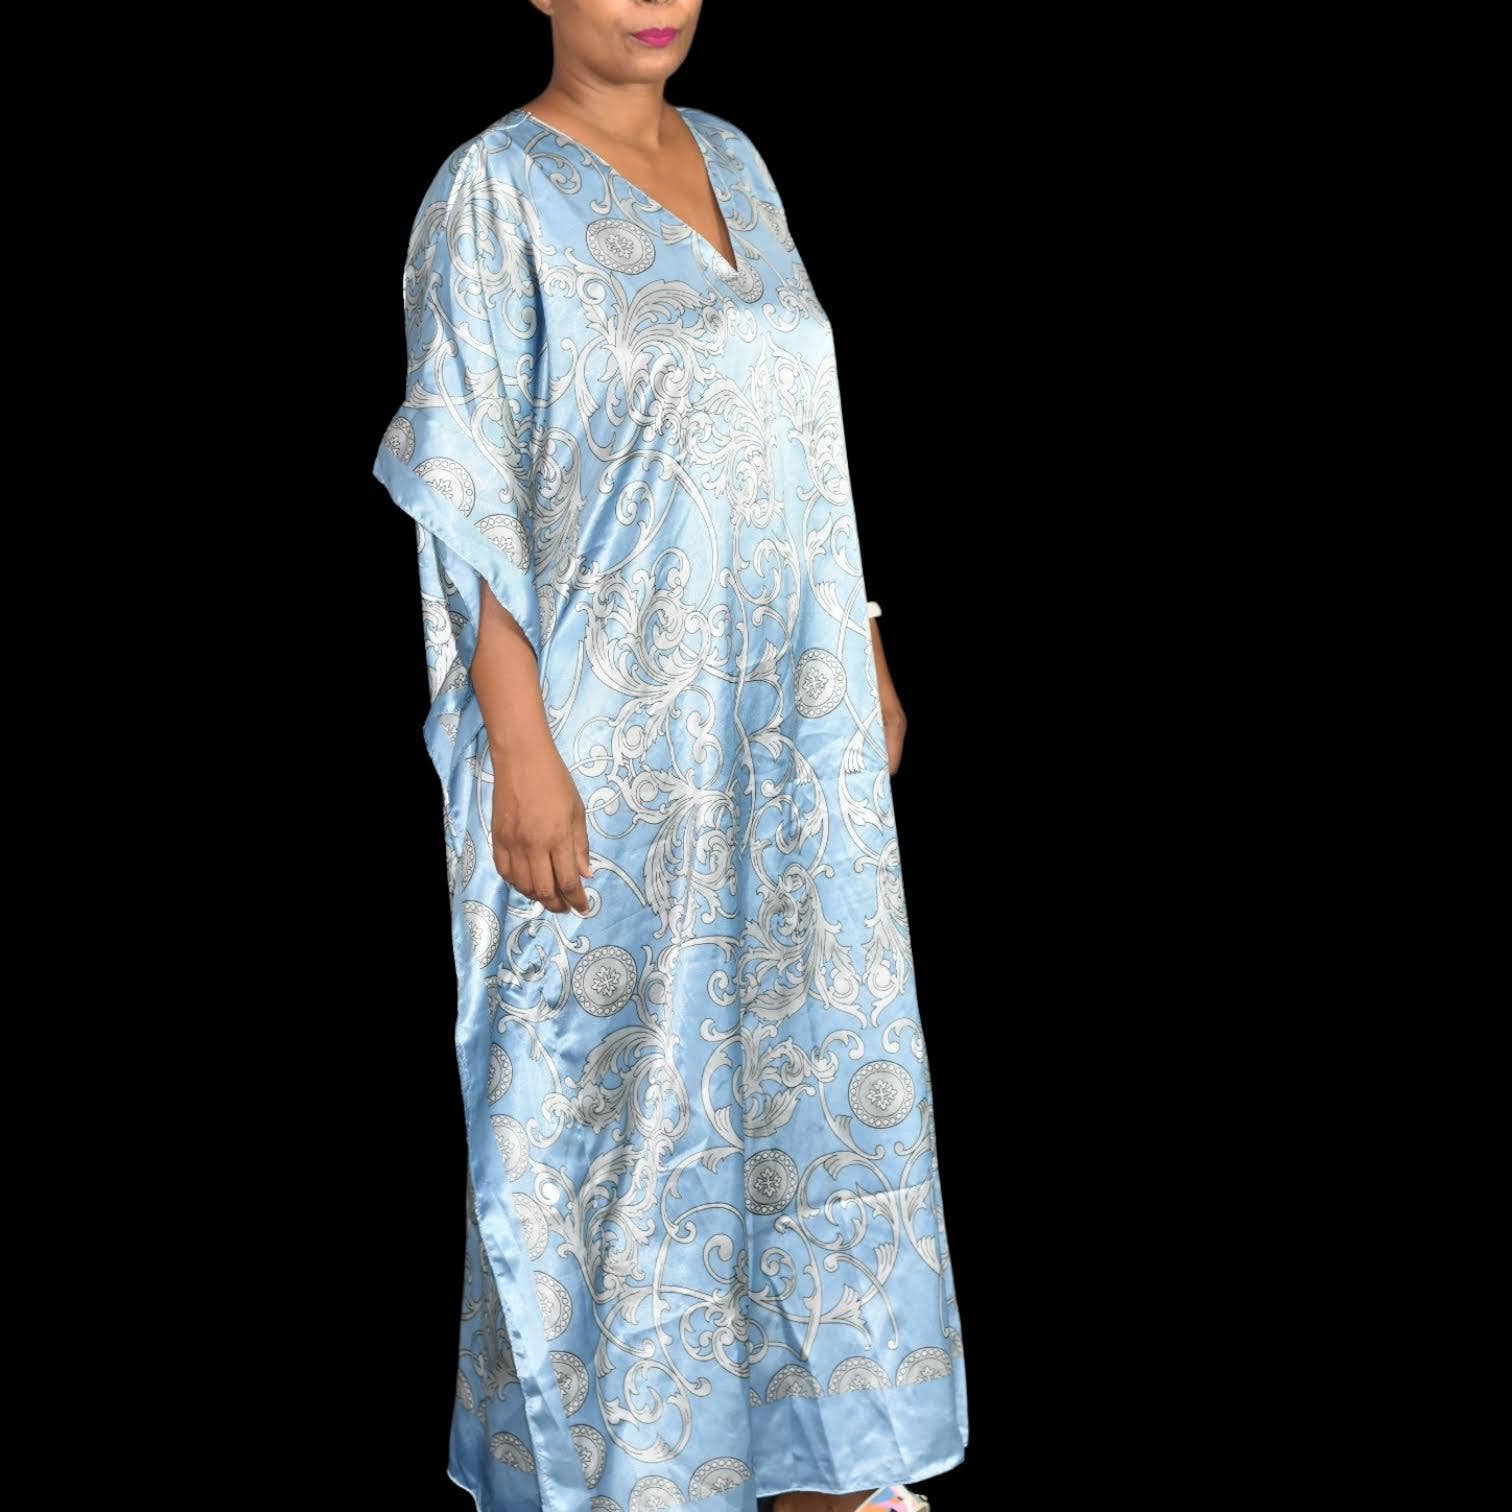 Midnight Velvet Caftan Dress Blue Silver Baroque Silky Muumuu One Size S M L